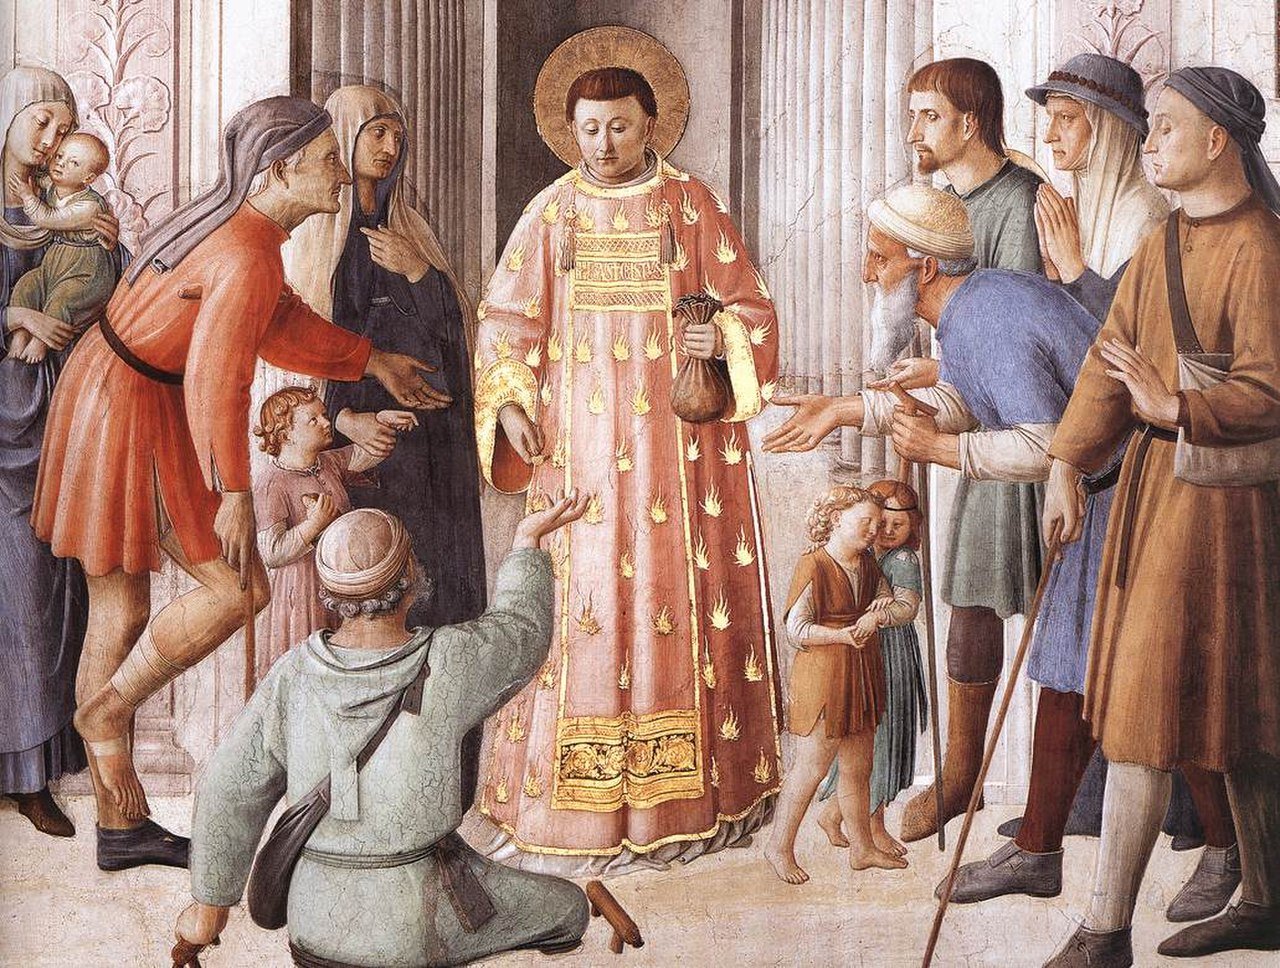 Богатство древней эпохи. Фра Беато Анджелико мученик. Фра Беато Анджелико итальянский Святой.